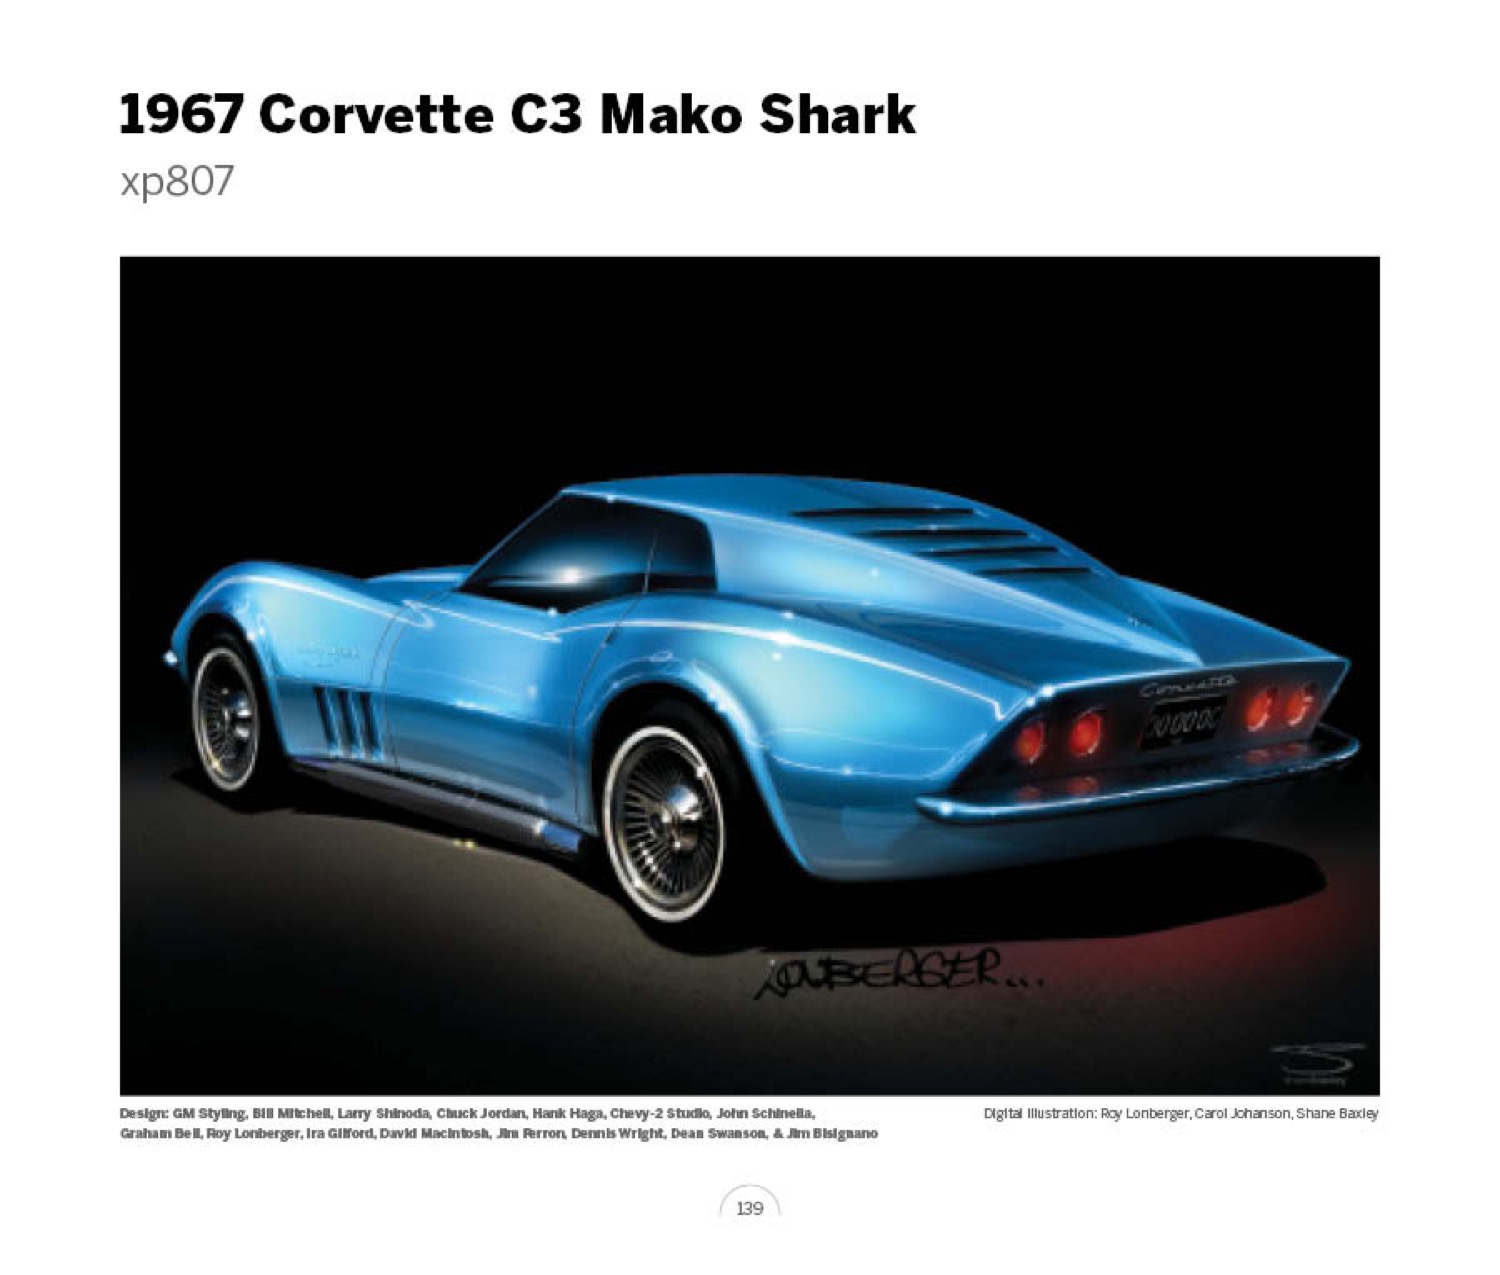 (13) 1967 Corvette C3 Mako Shark xp807 LoRez.jpg